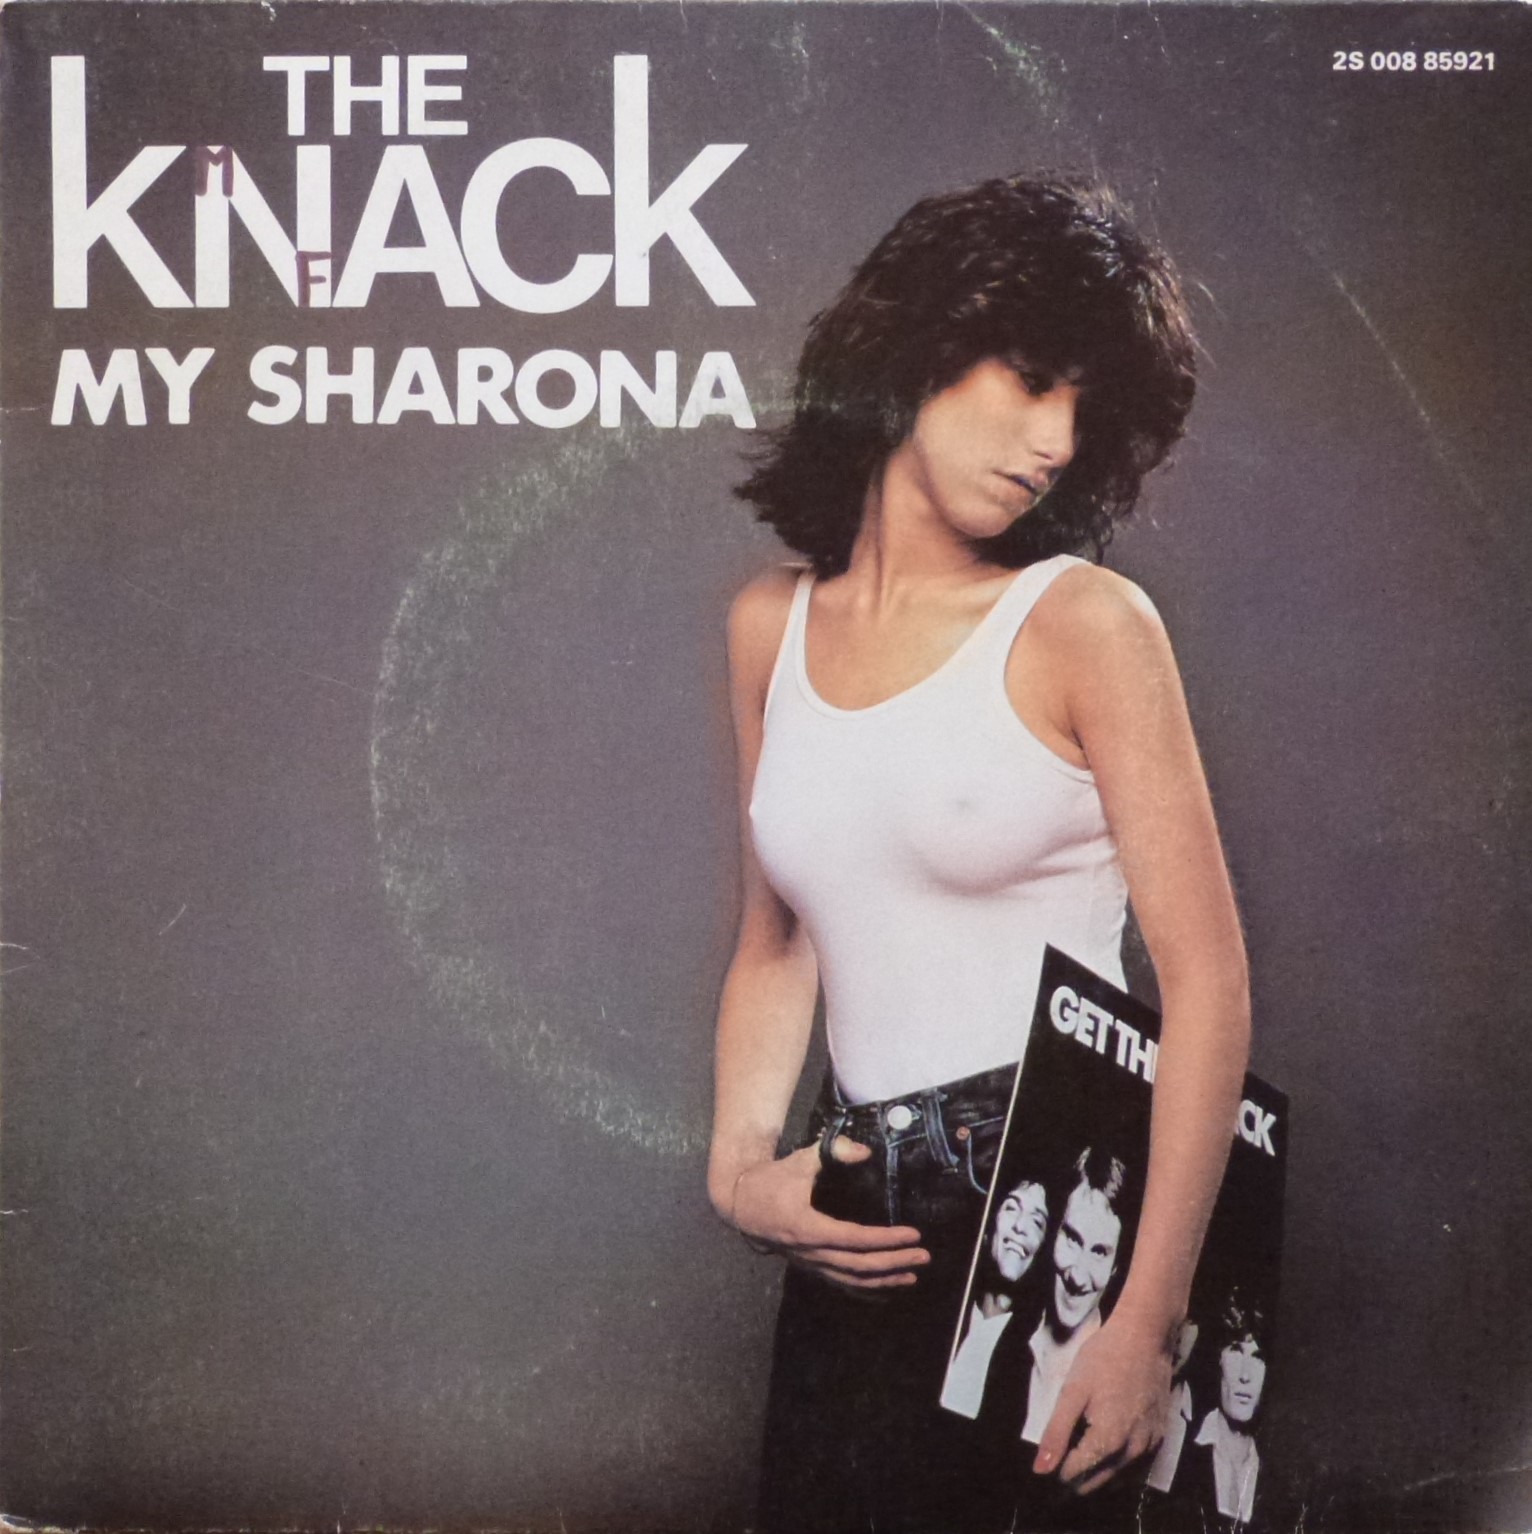 The knack, My Sharona